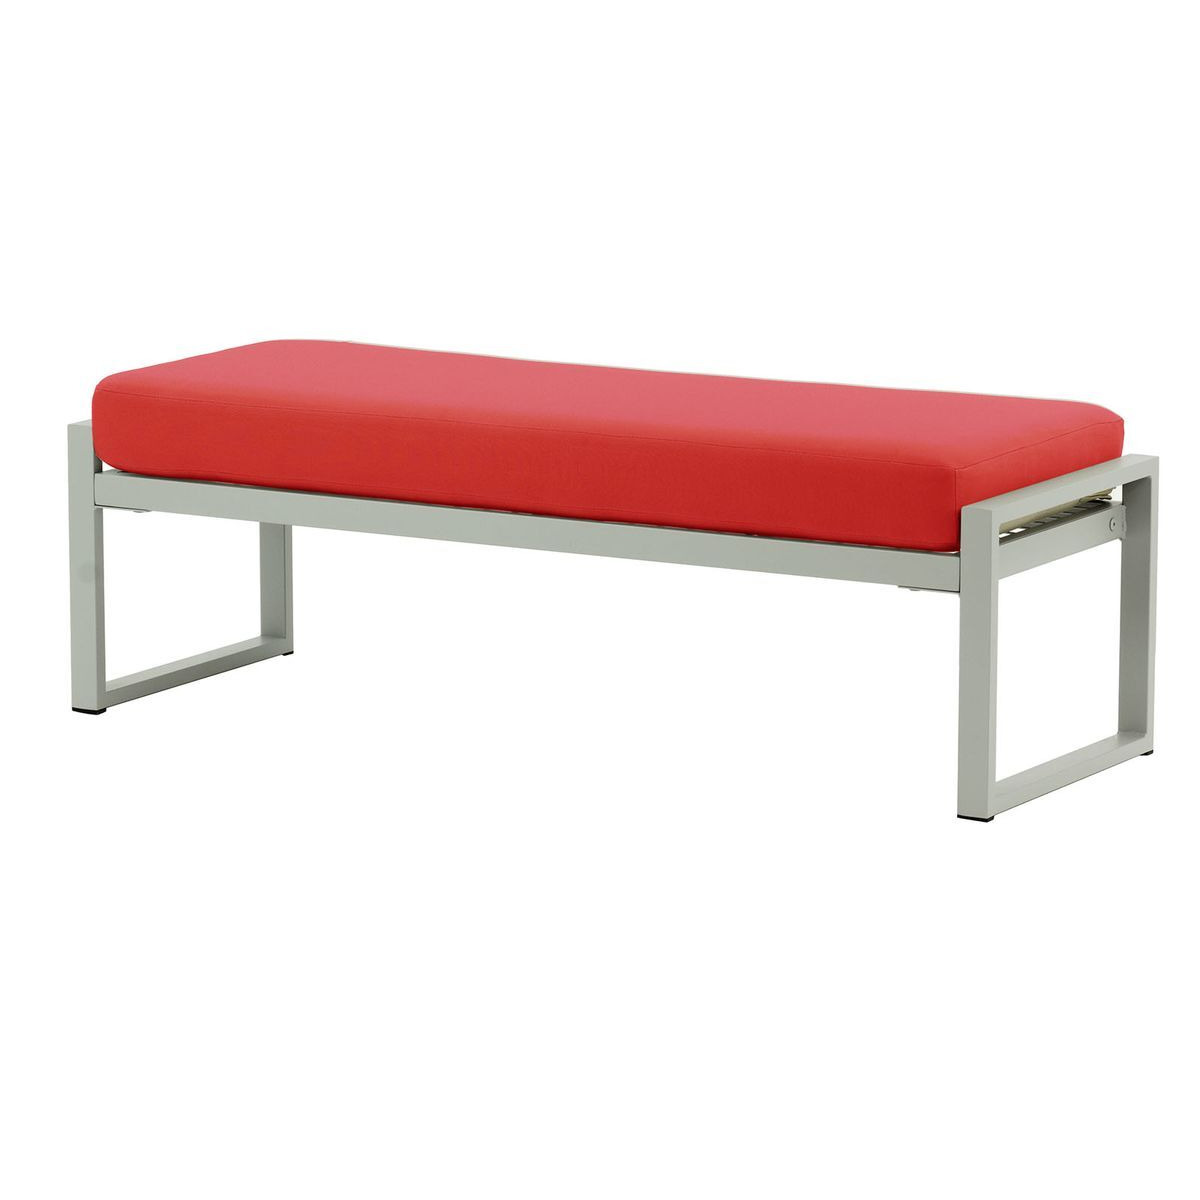 Sunset Garden Bench, red, Leg colour: grey steel - image 1